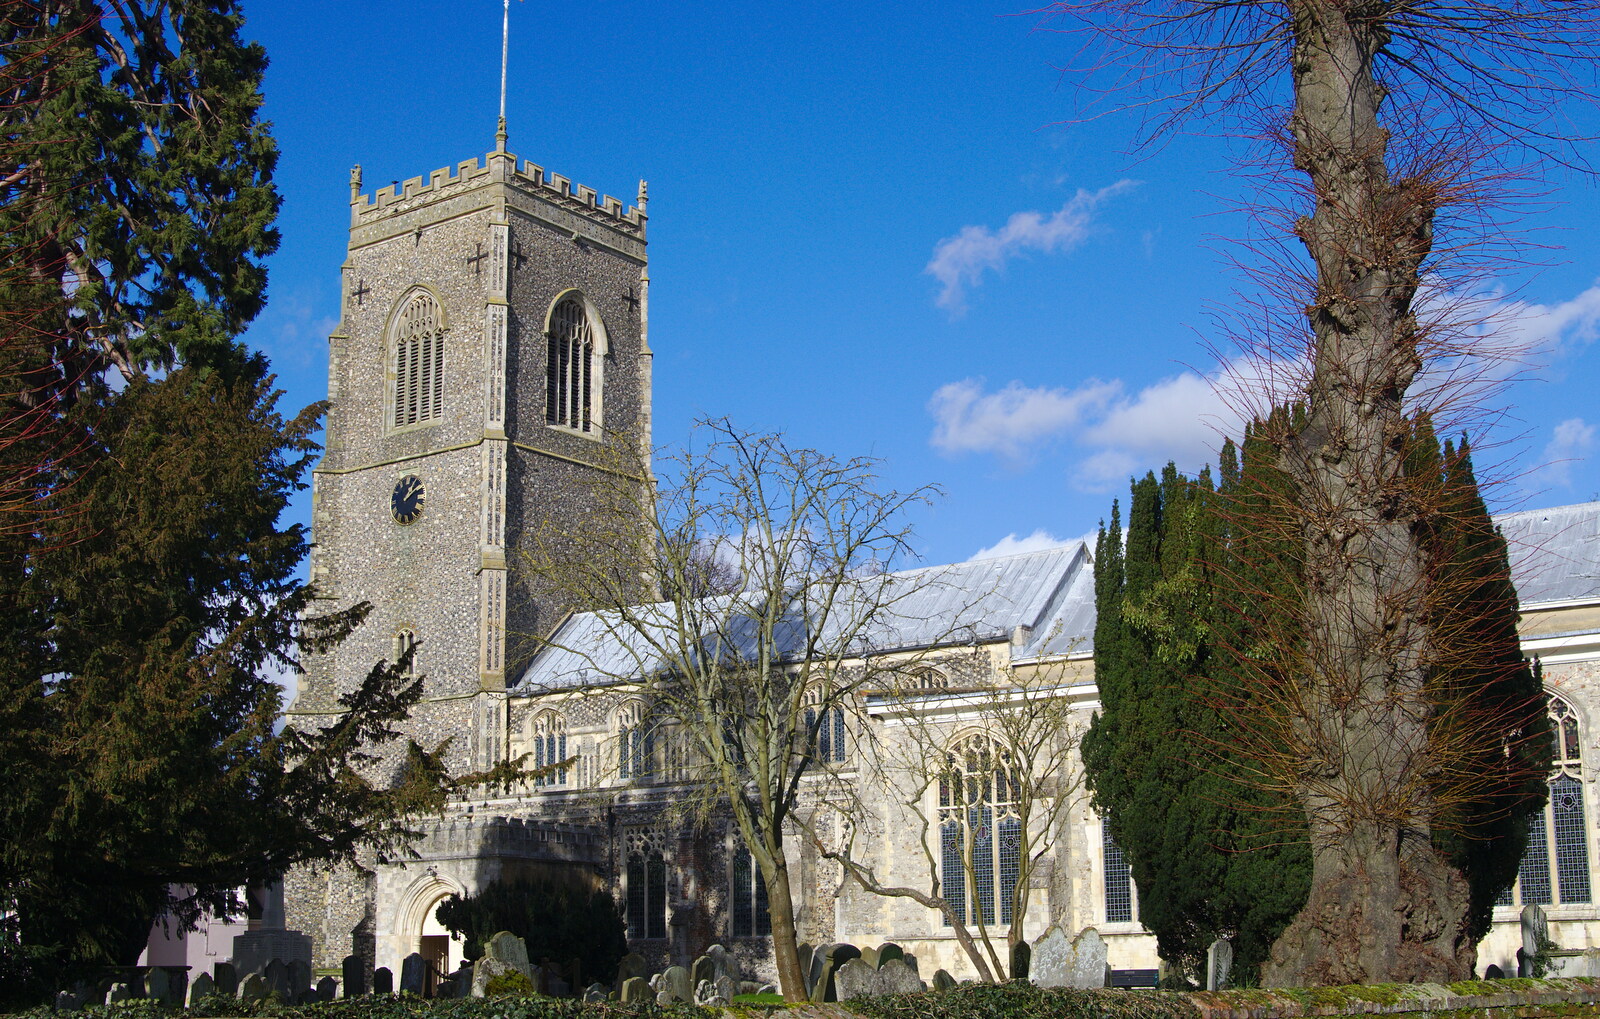 Framlingham Church from A Trip to Framlingham Castle, Framlingham, Suffolk - 16th February 2014